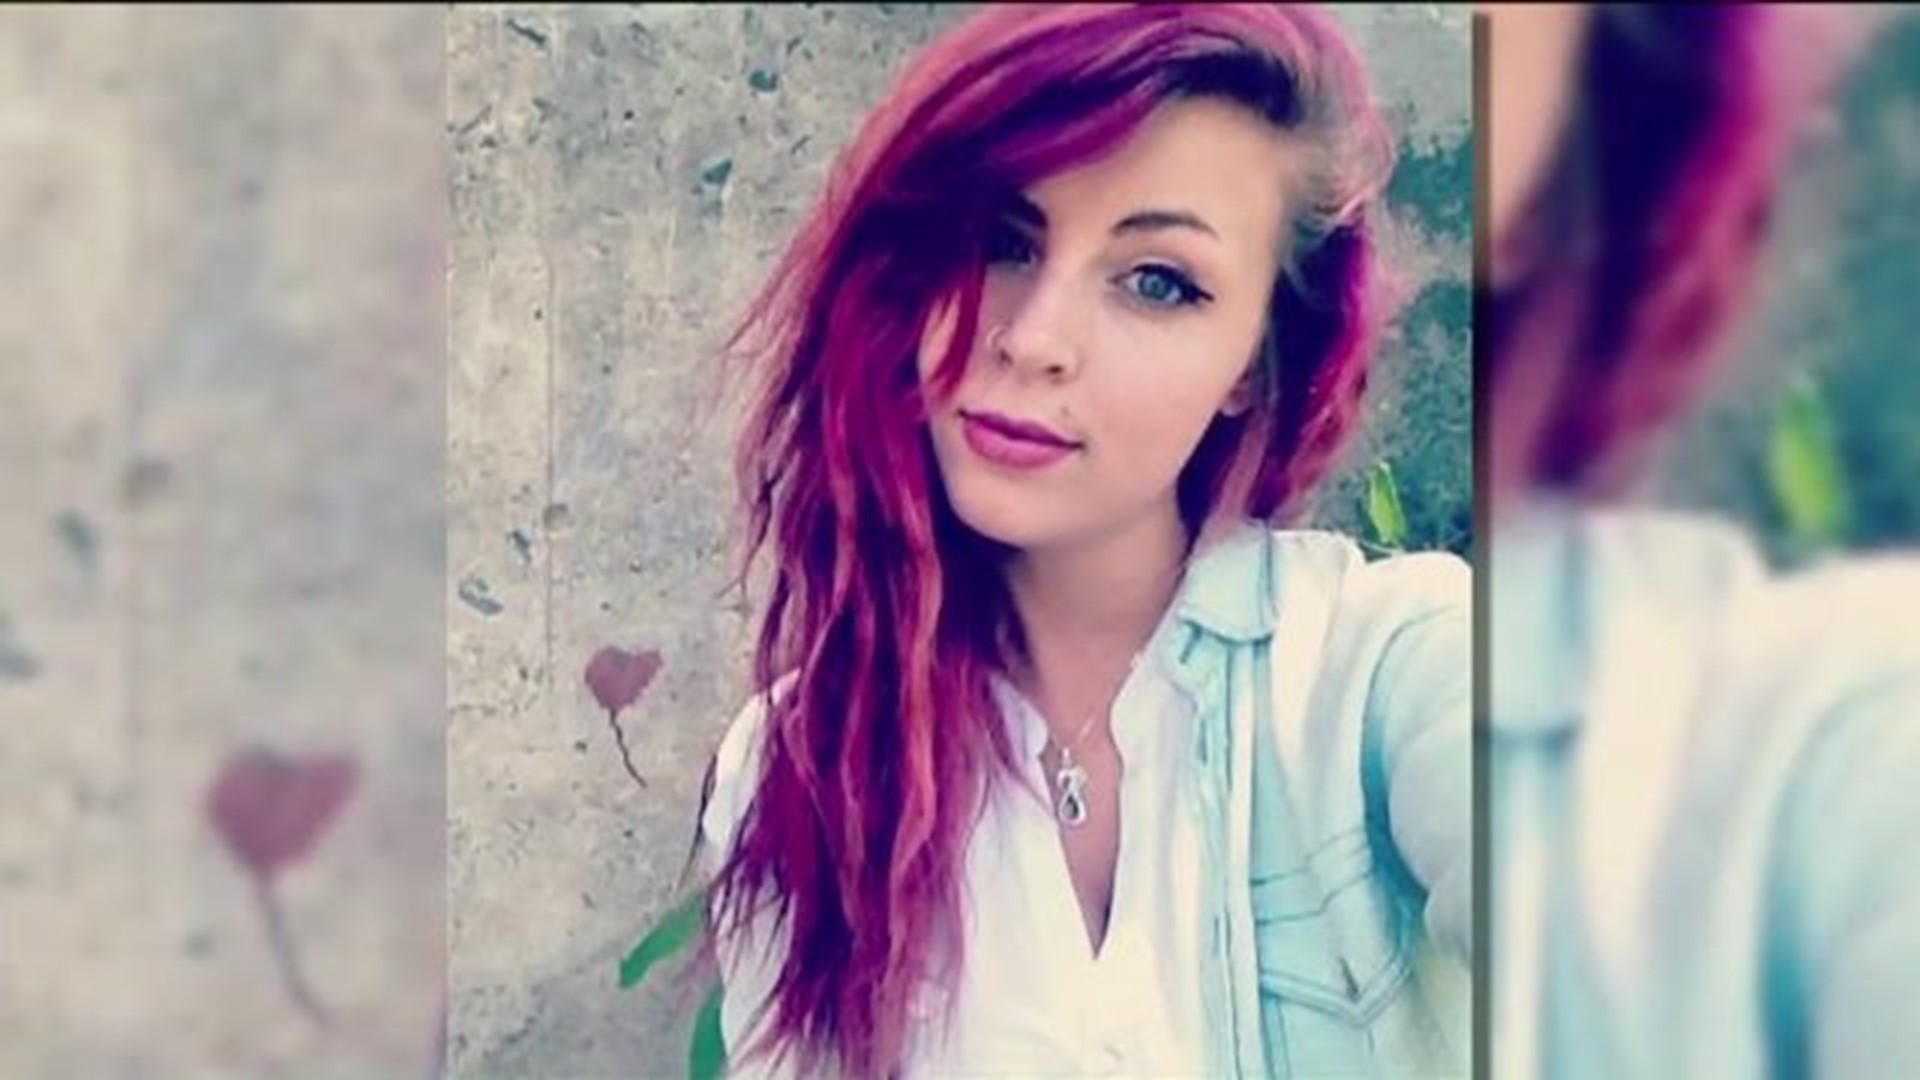 Teen Dies in Crash on 18th Birthday